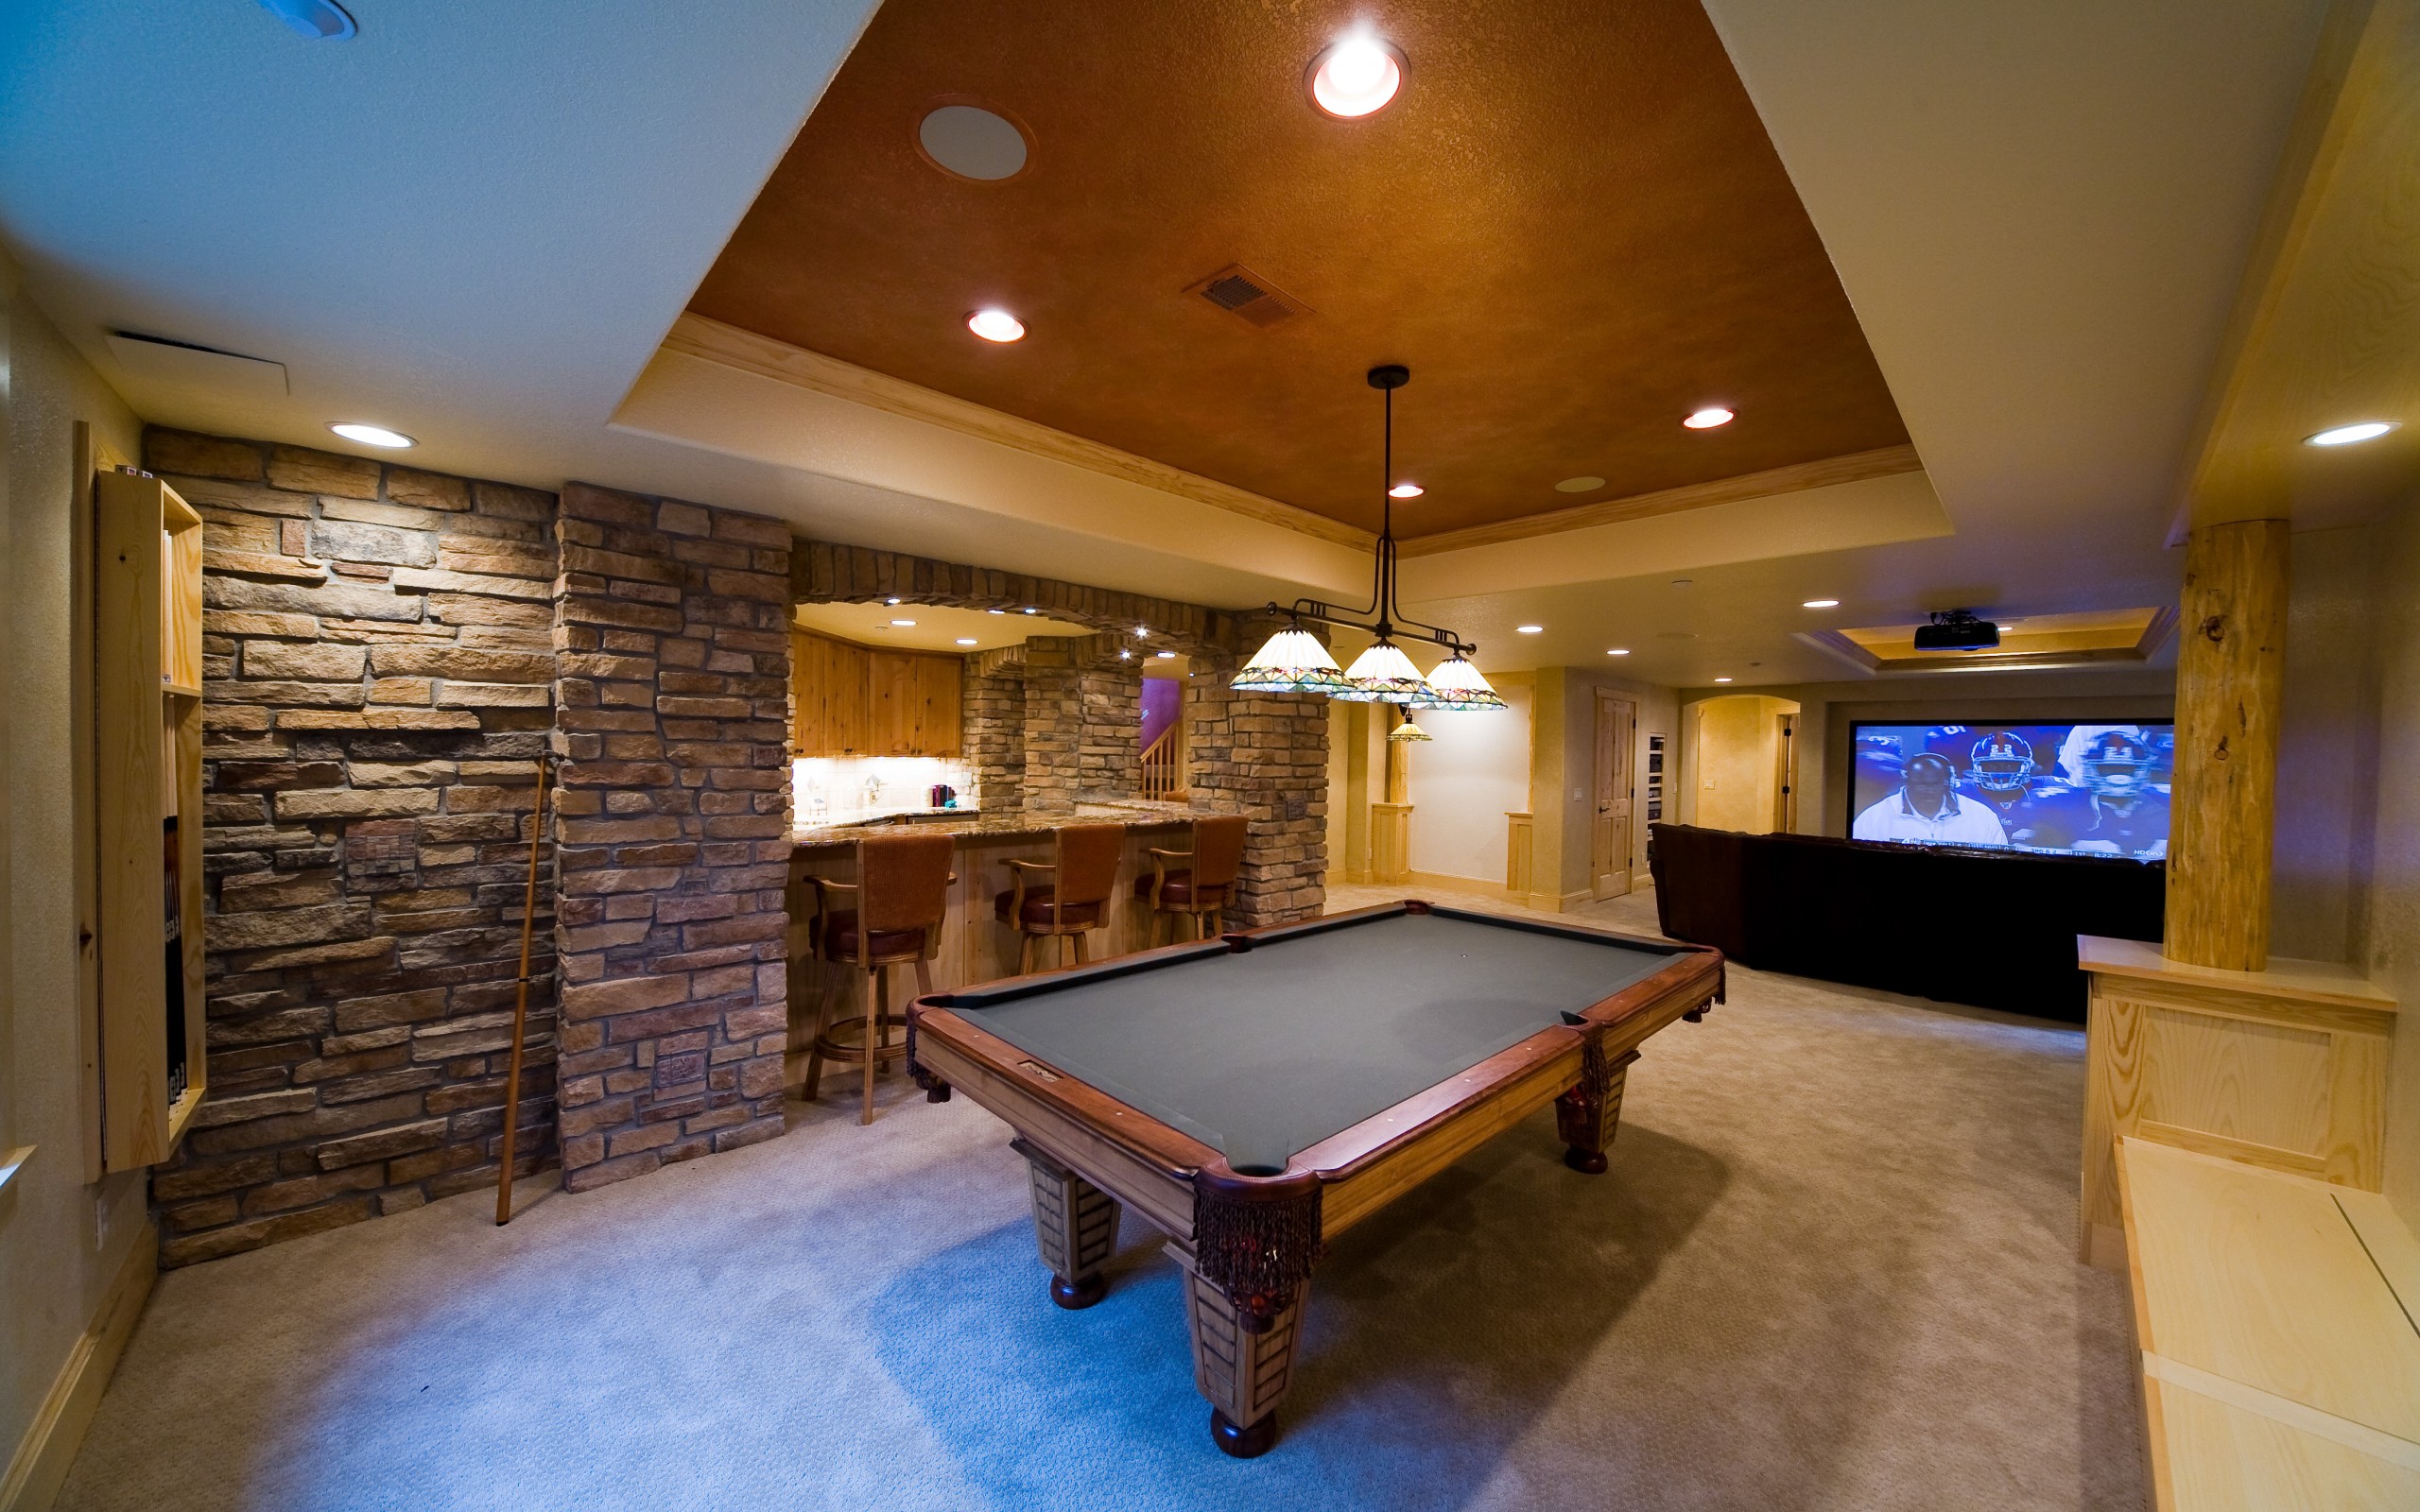 комната для бильярда, интерьер, бильярд, billiards room, interior, billiards